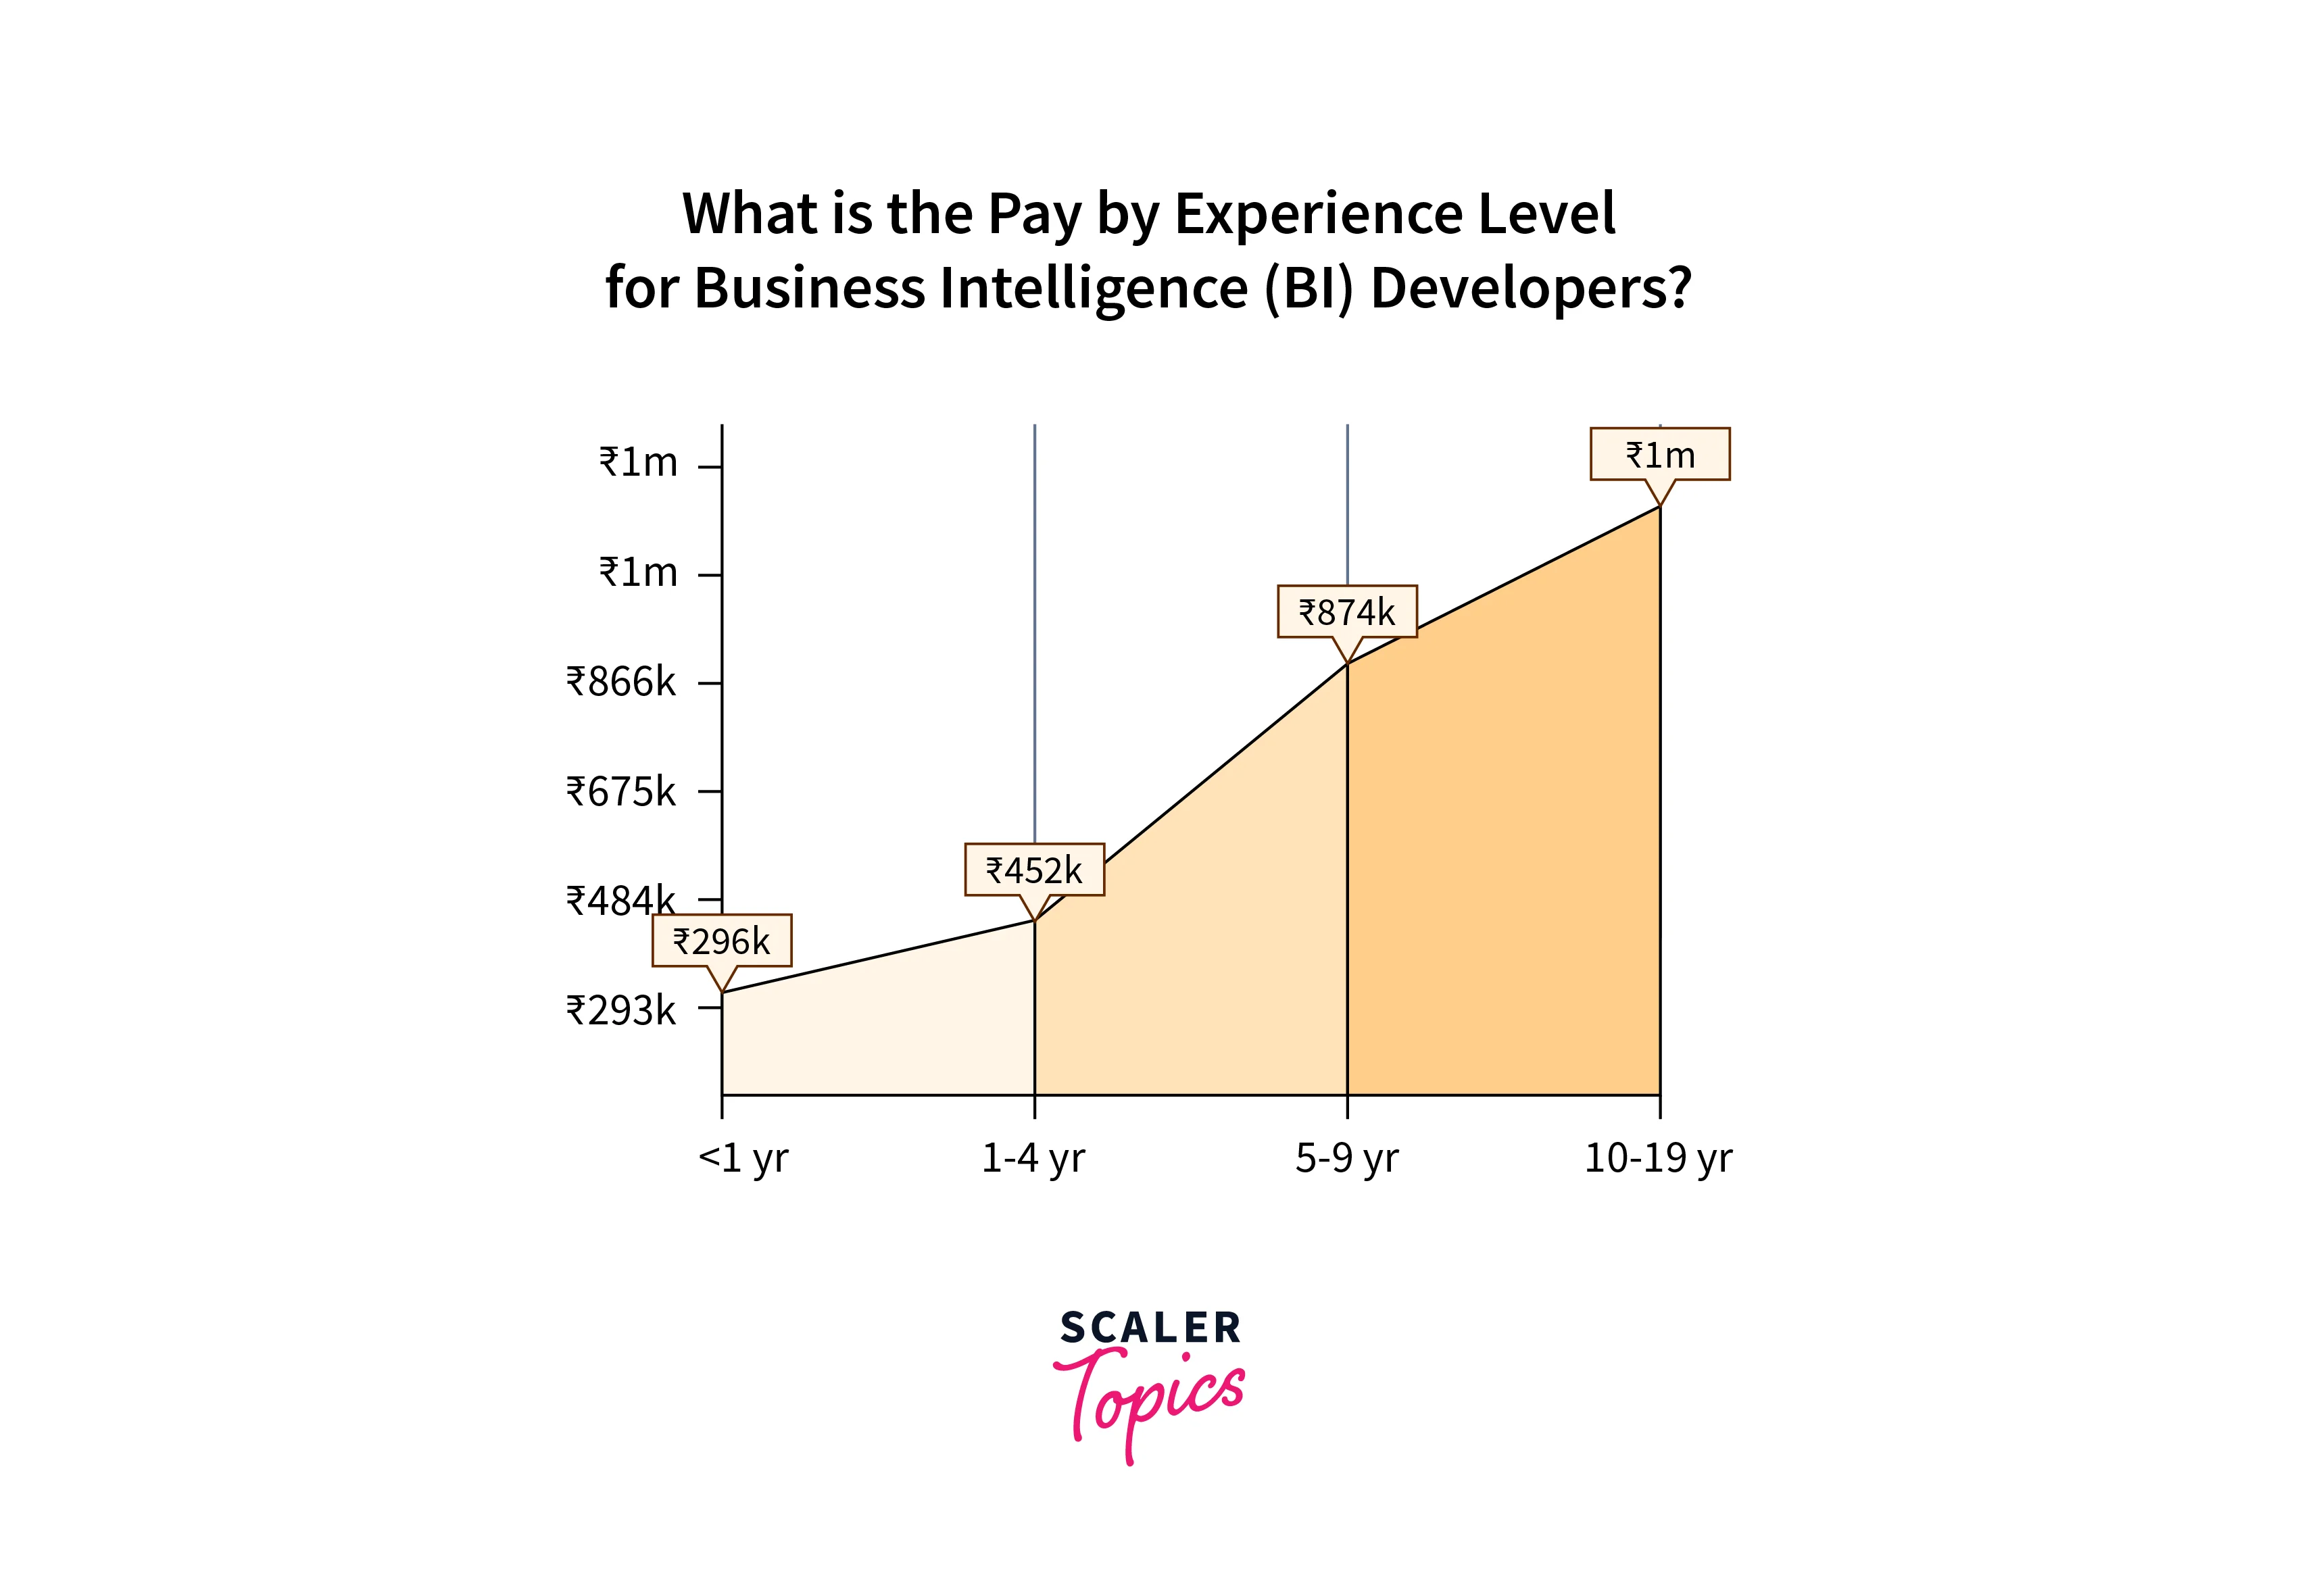 bi developer salary by experience level